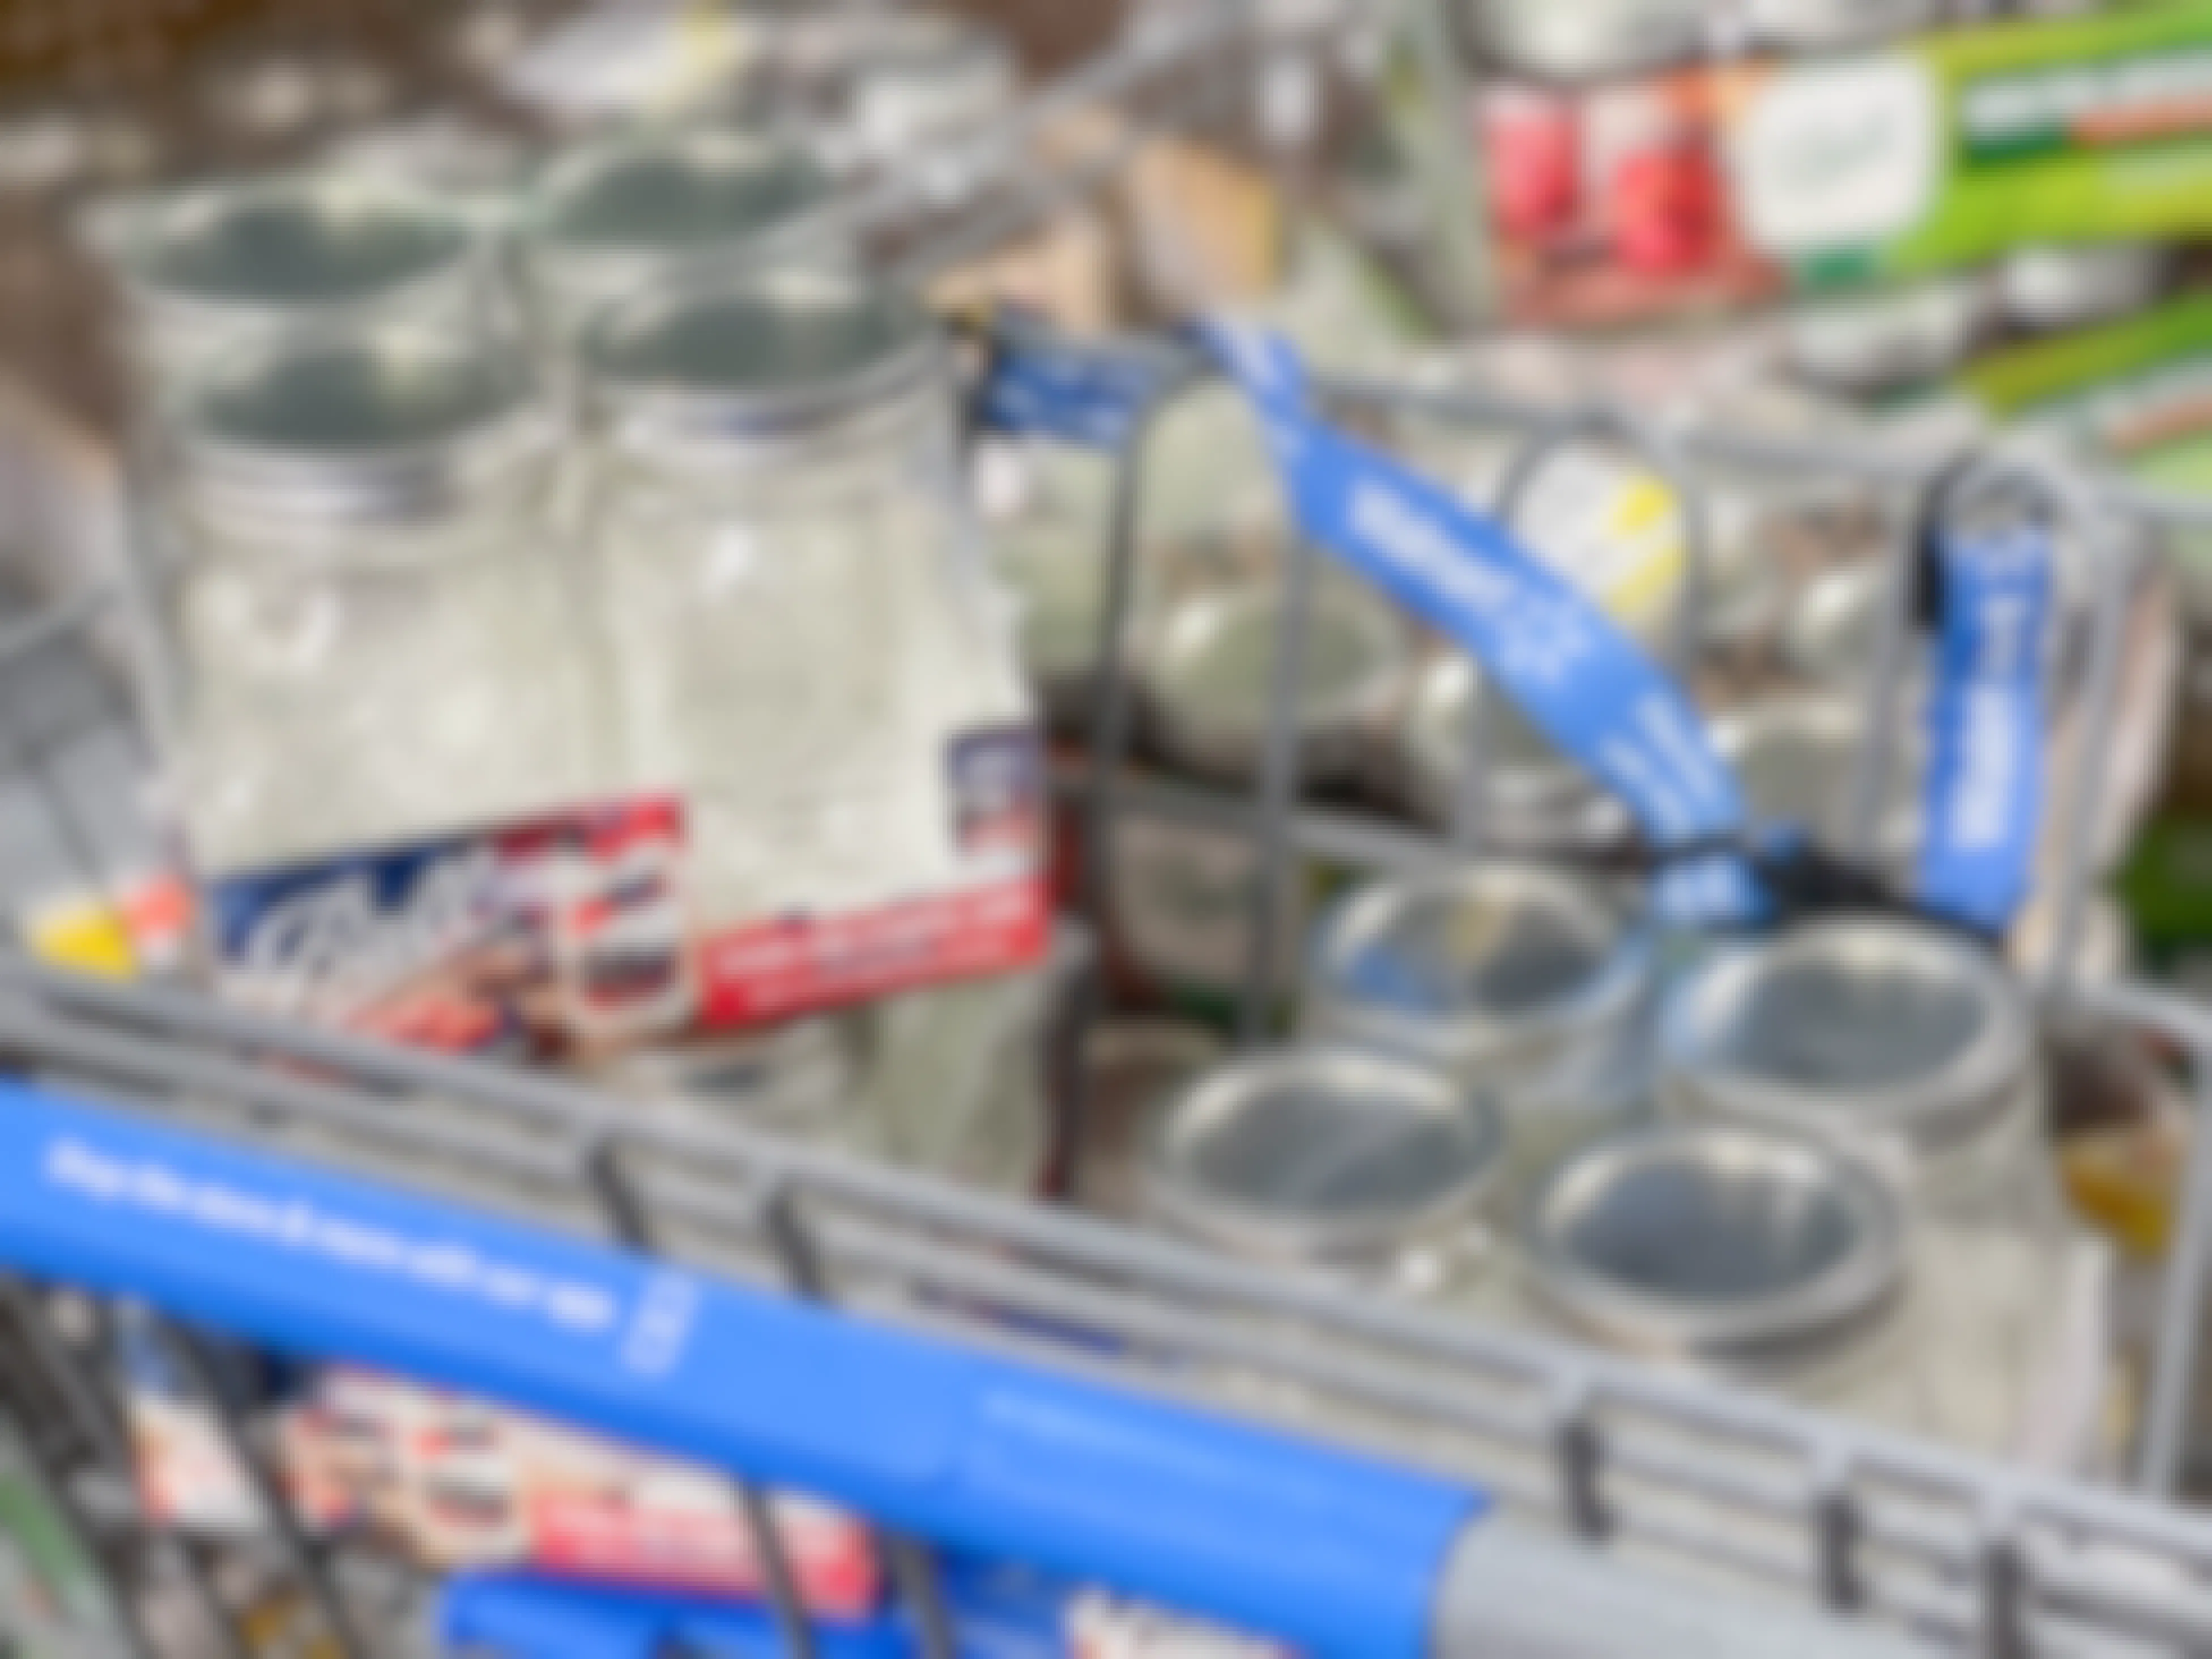 Several 4-packs of Ball canning jars filling a Walmart shopping cart basket.